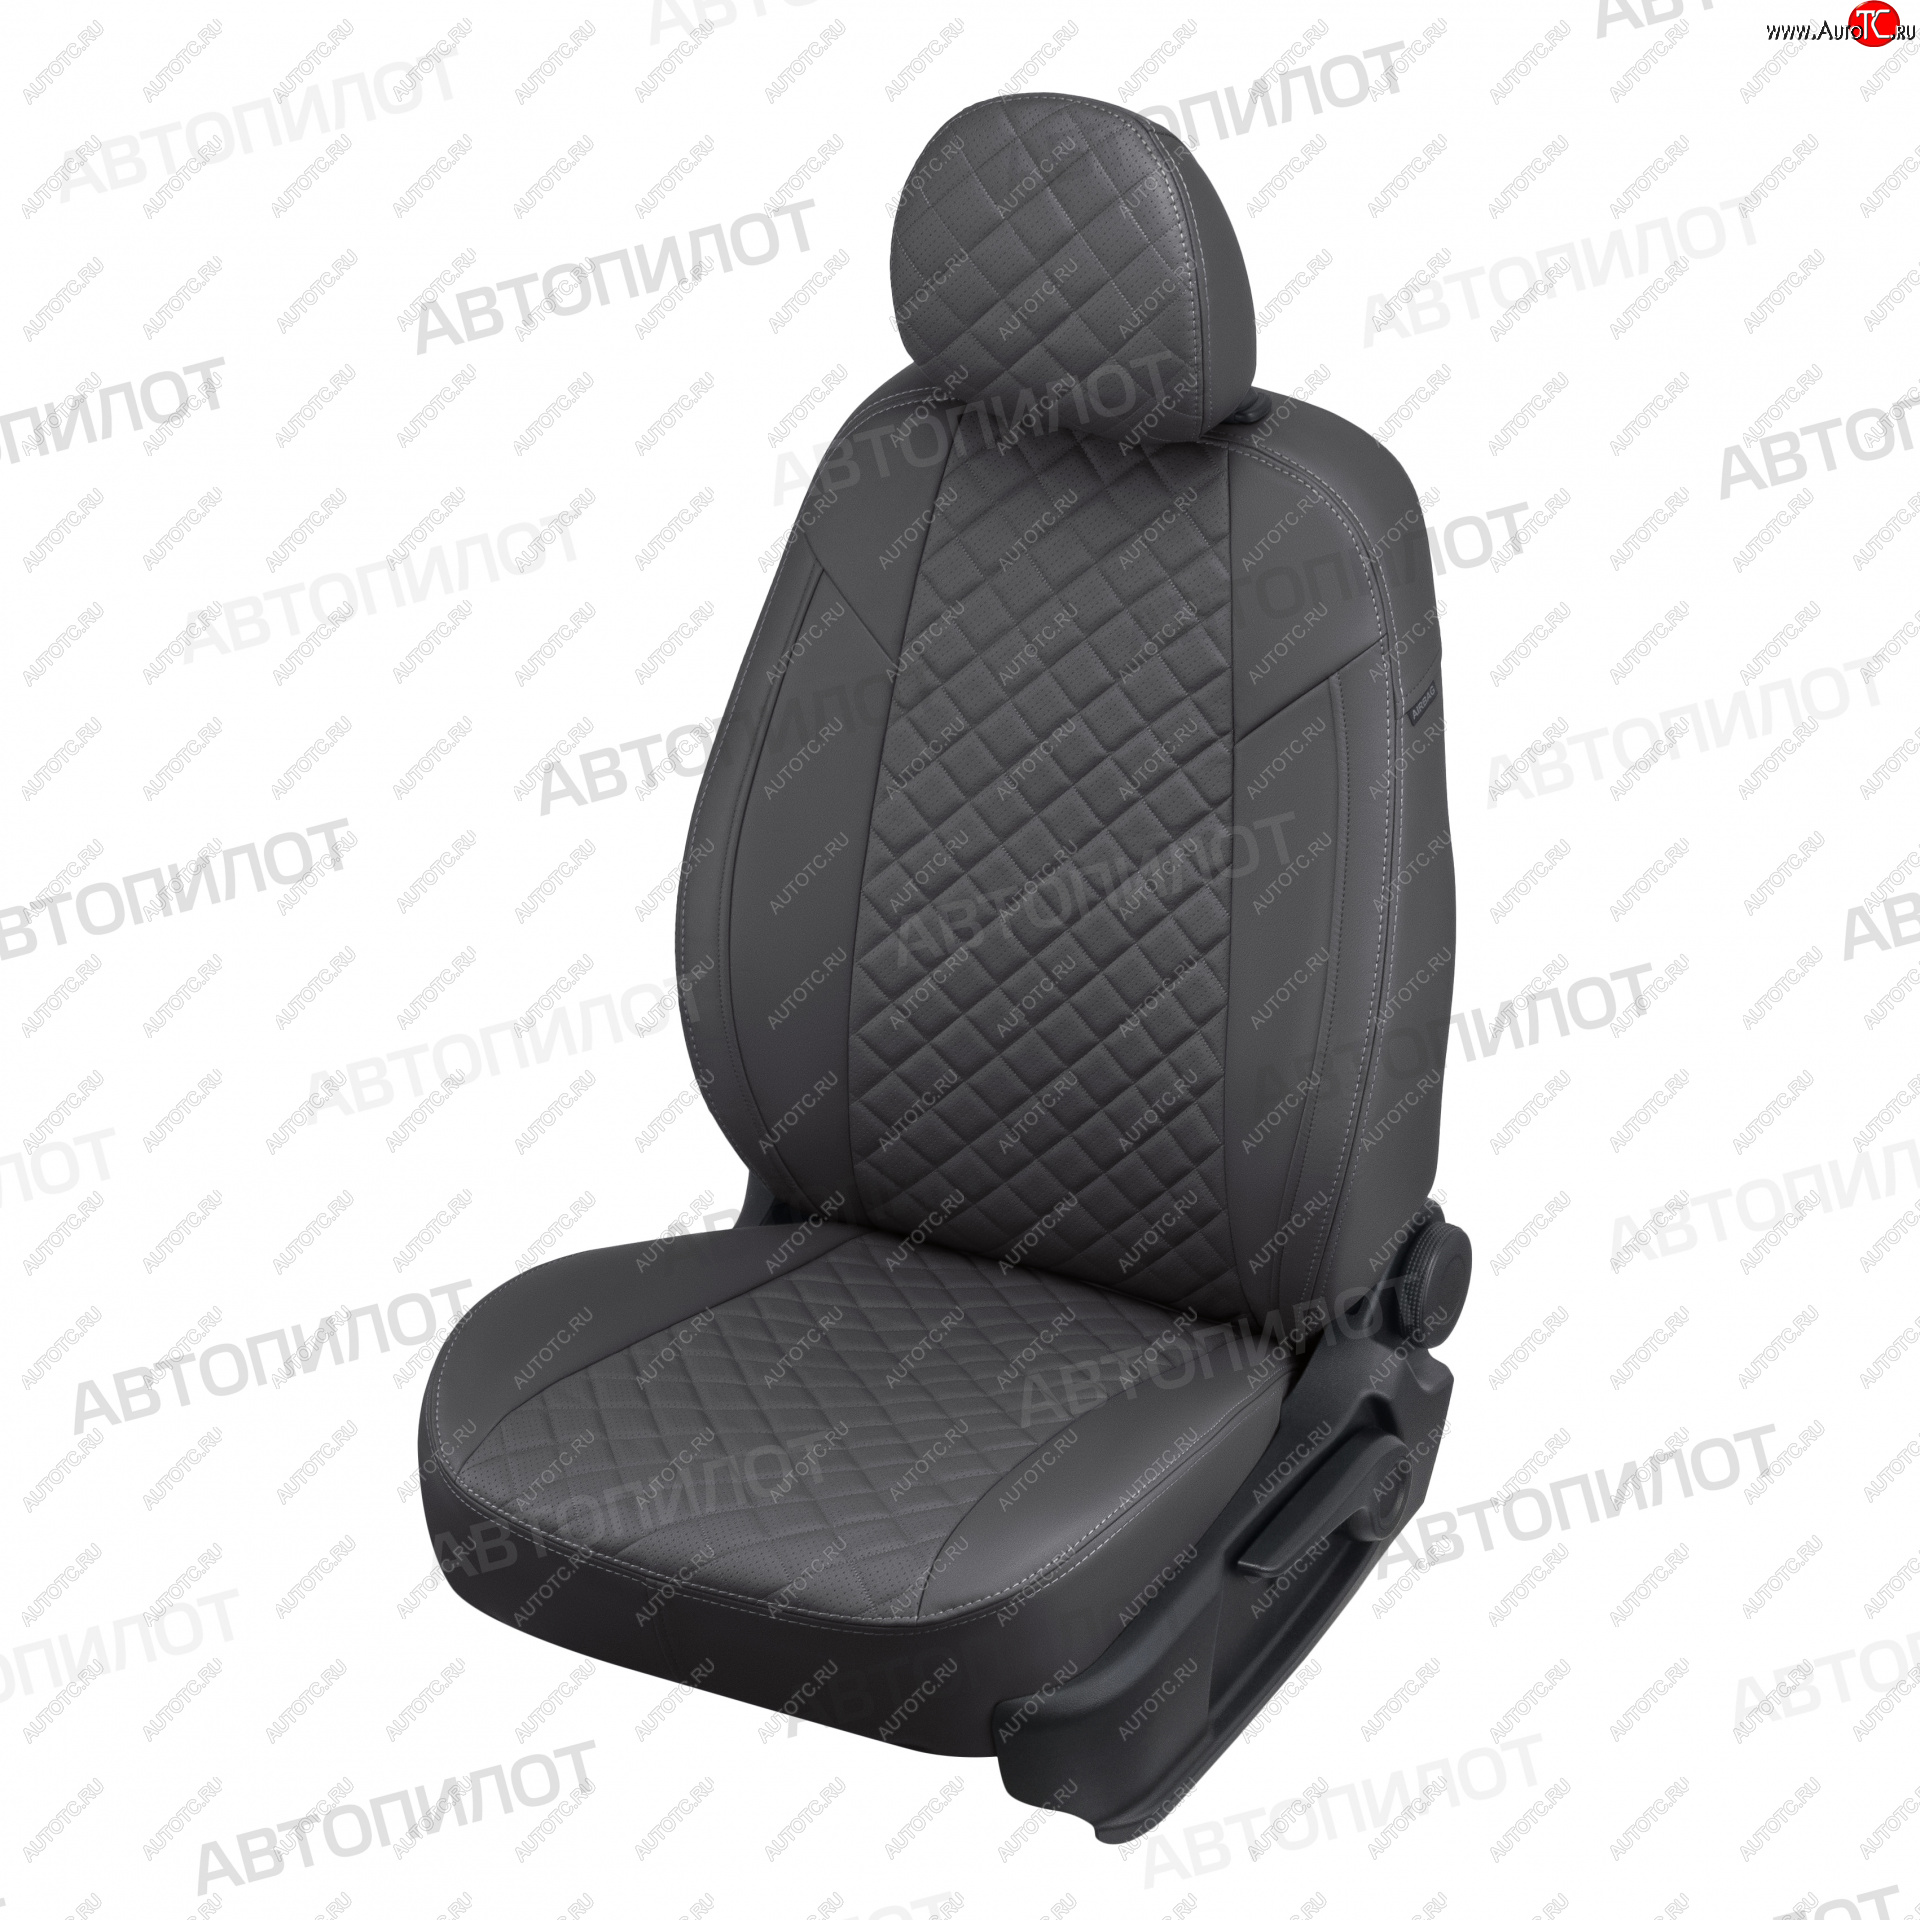 13 999 р. Чехлы сидений (экокожа) Автопилот Ромб  Chevrolet Aveo ( T200,  T250) (2002-2011) (темно-серый)